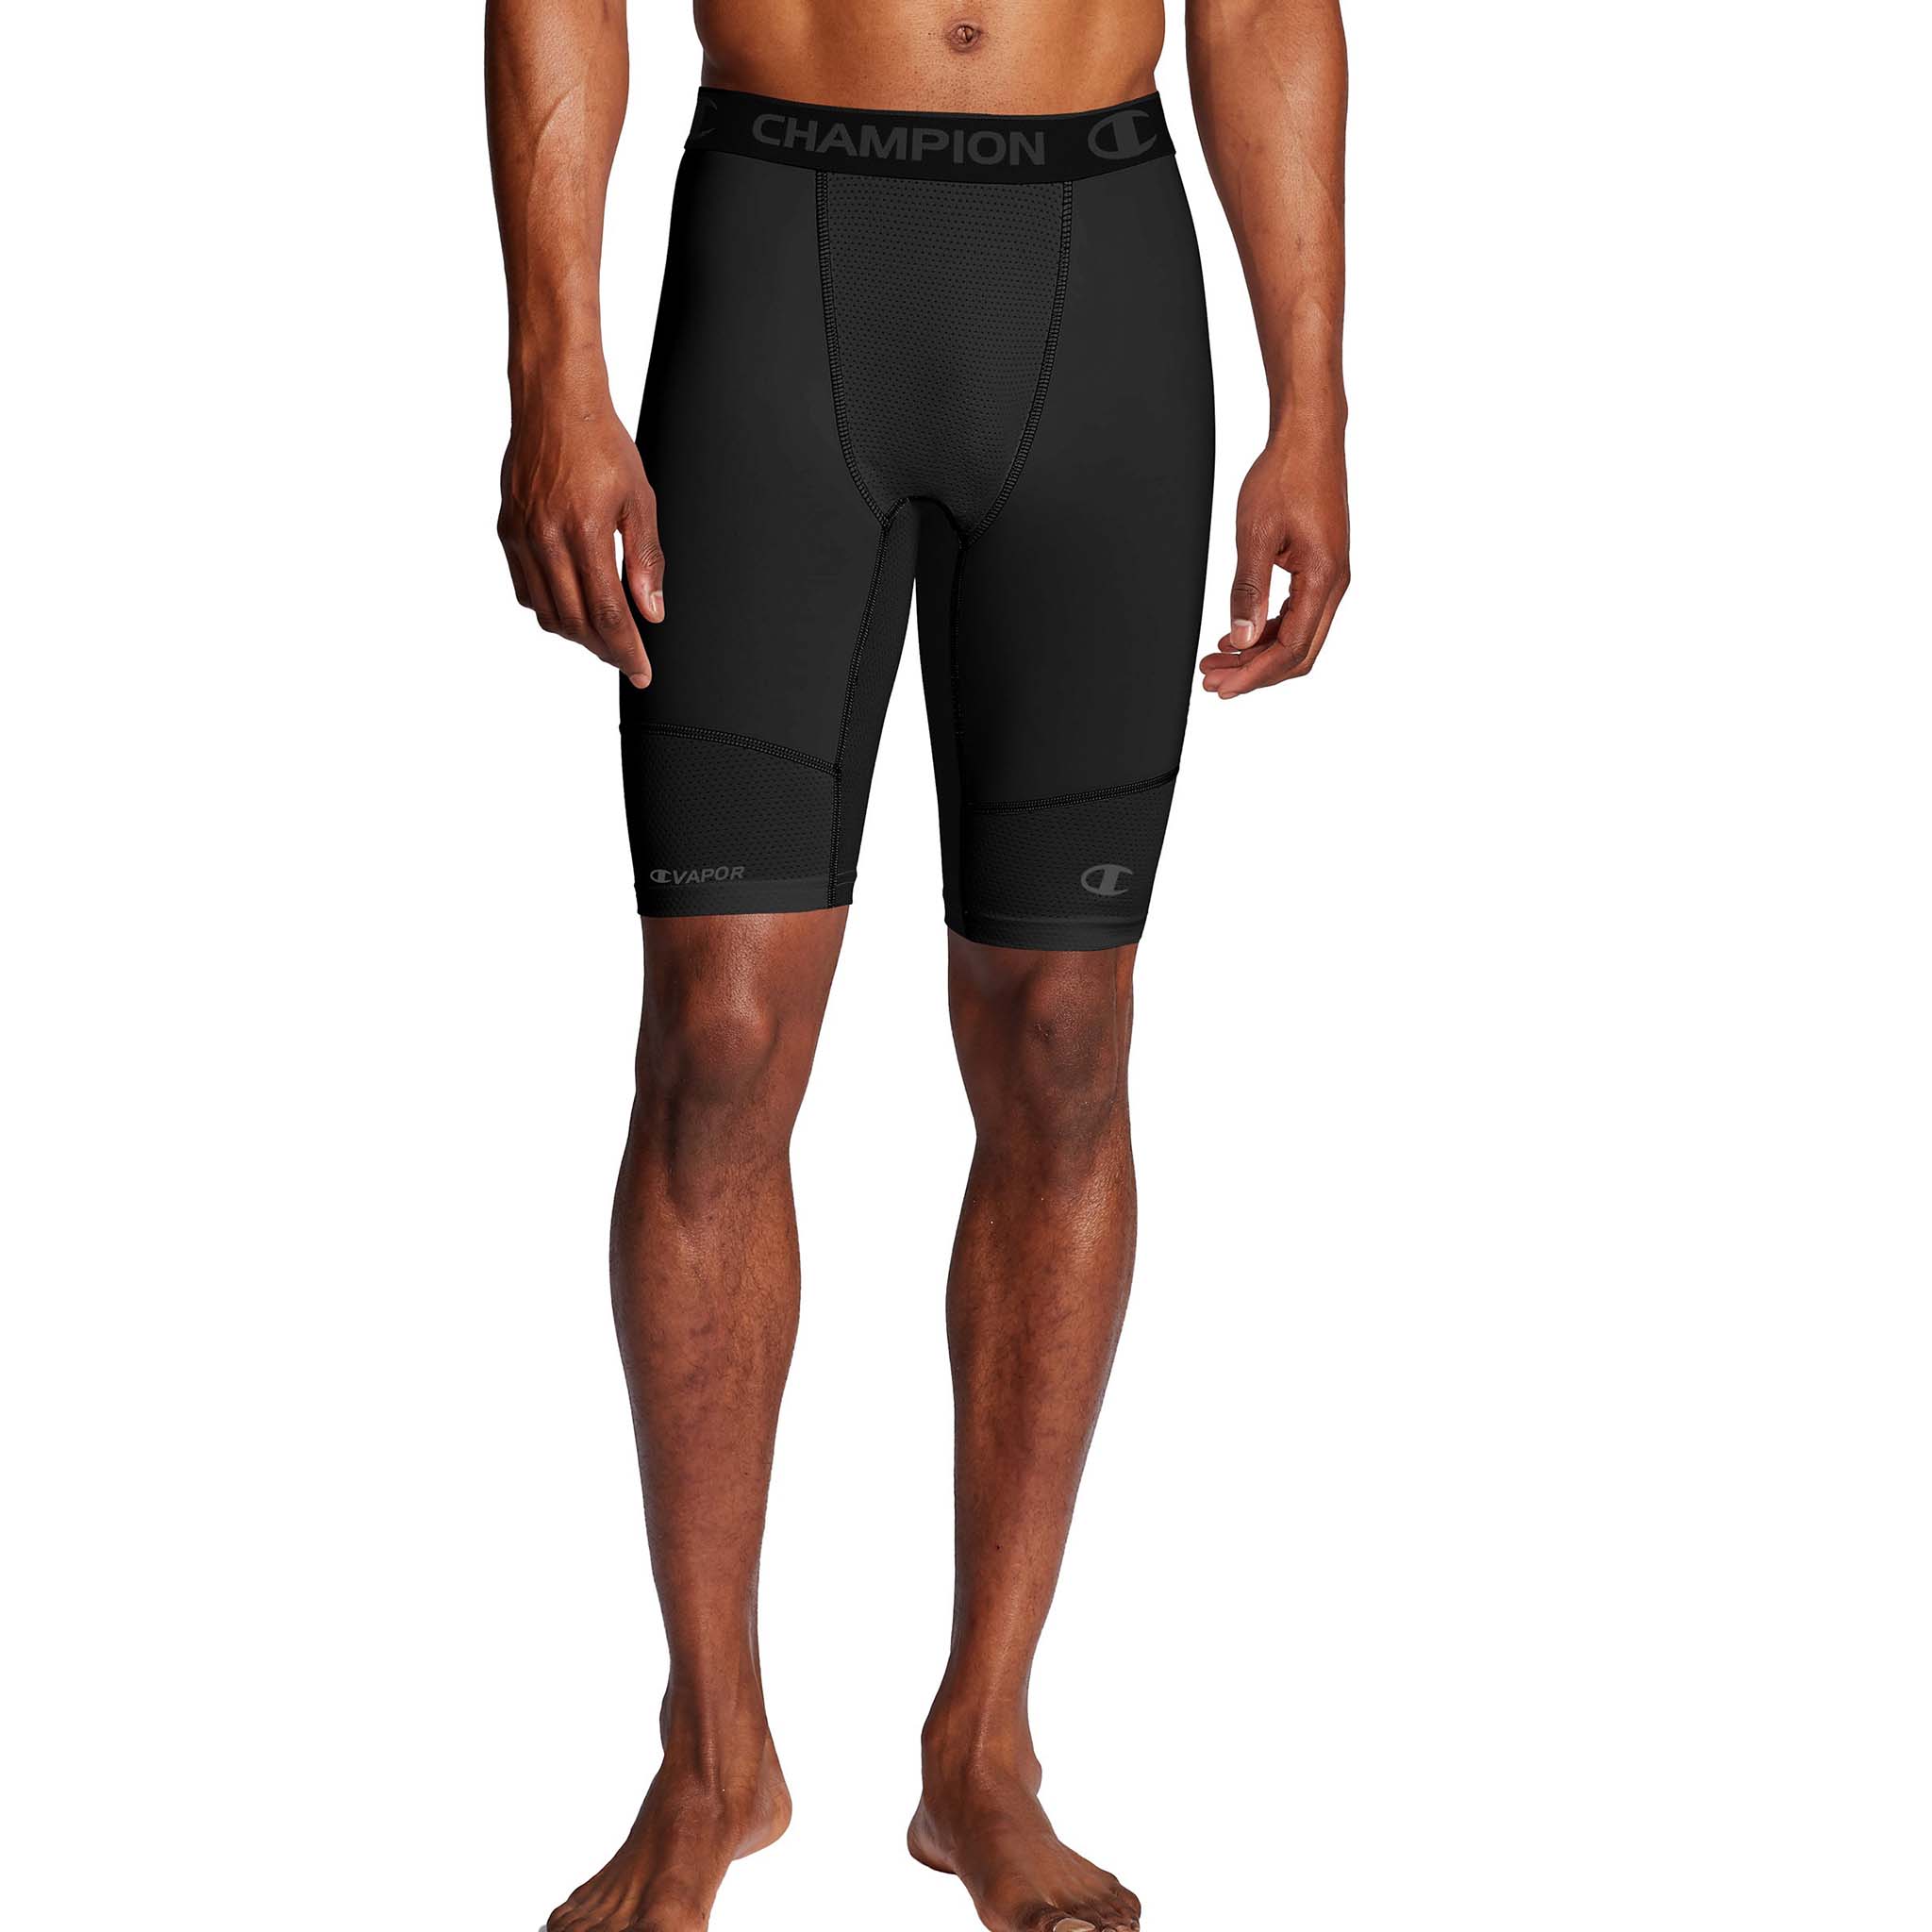 Men's 9 Compression Shorts - Camo